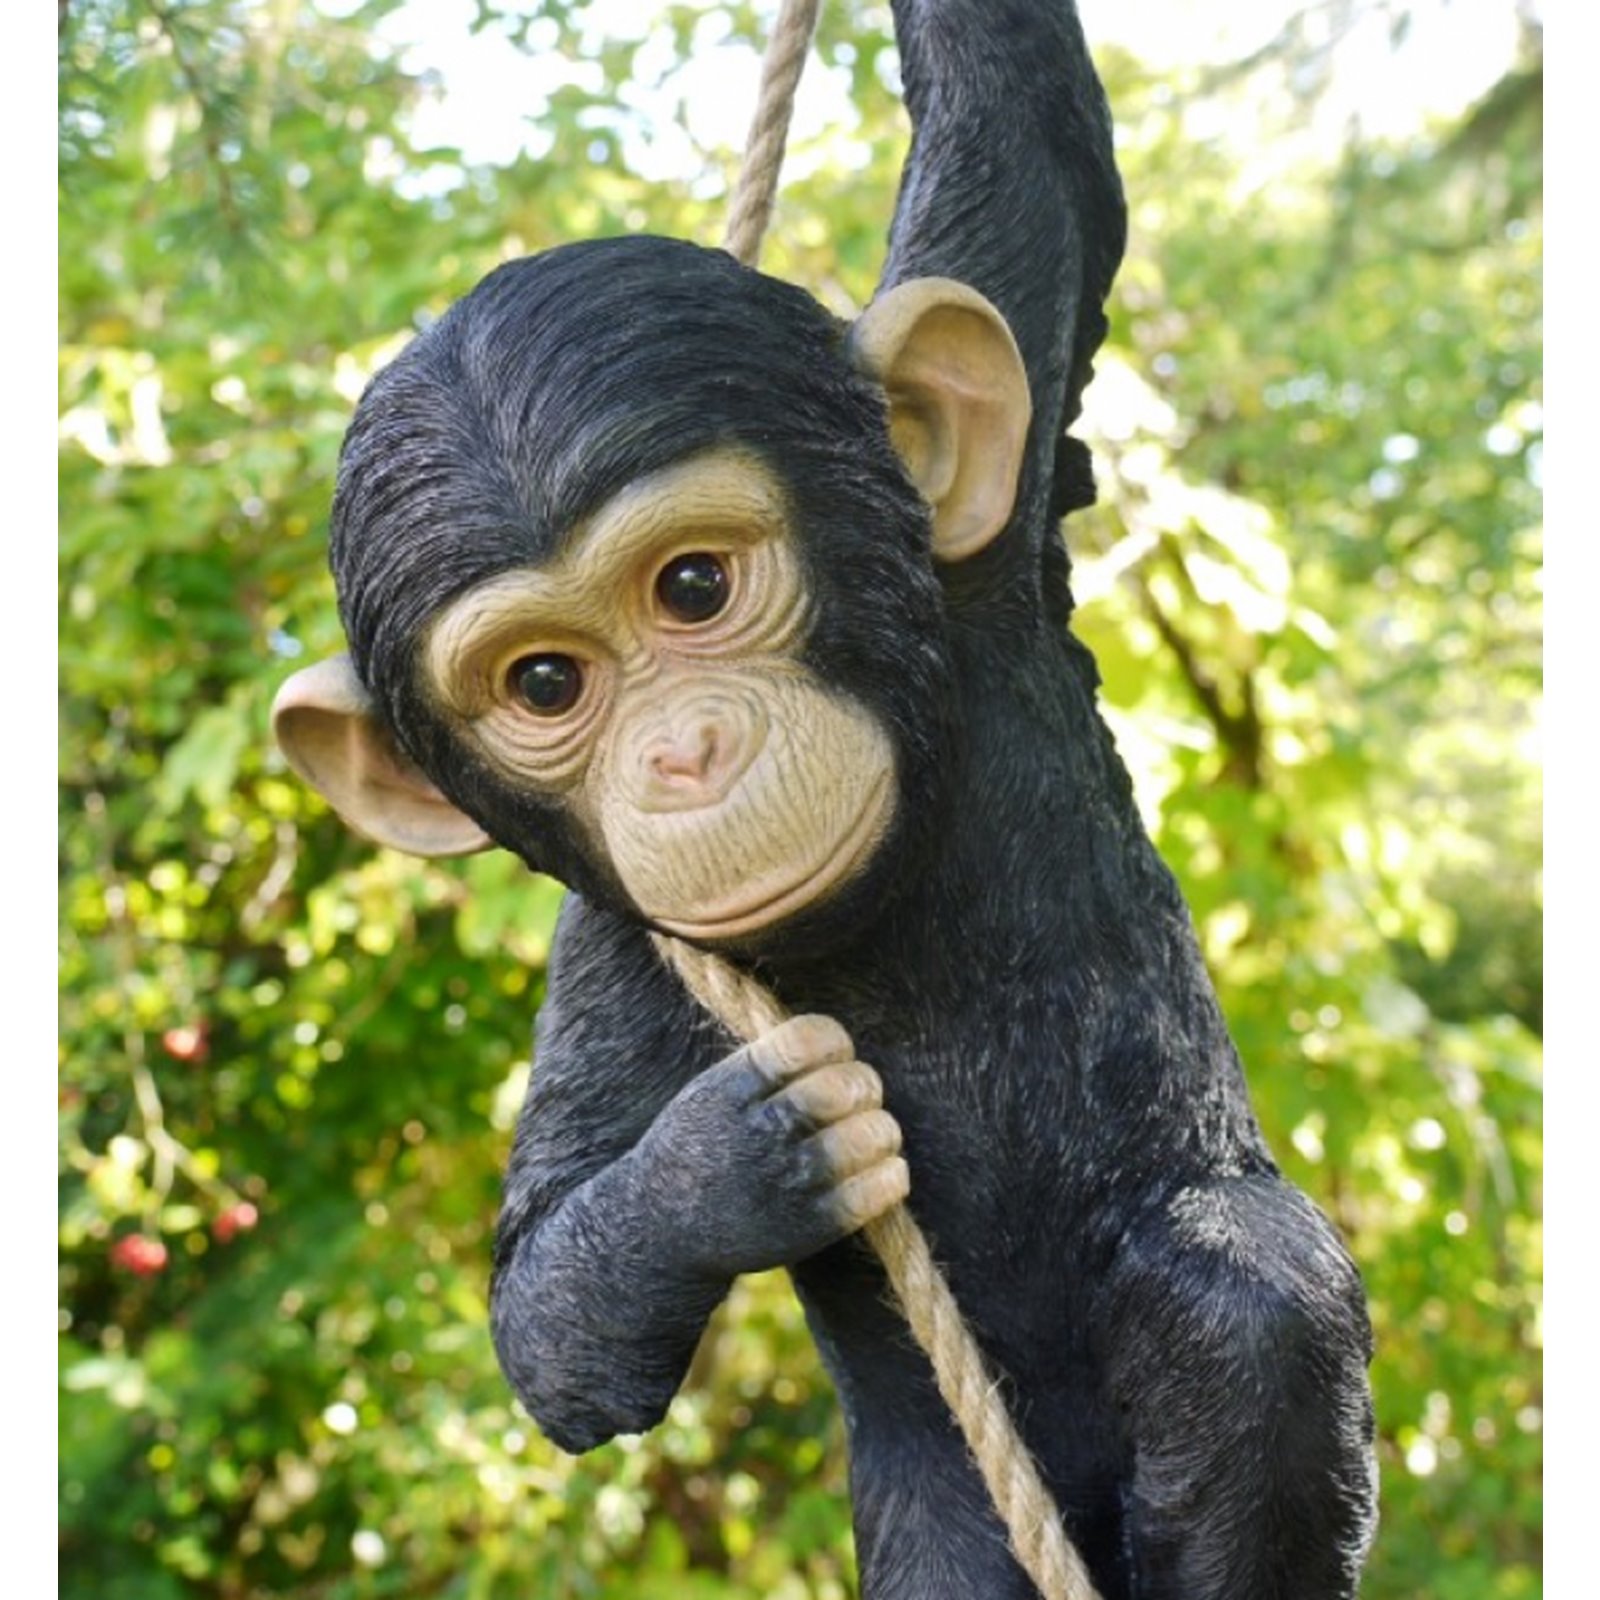 Climbing Monkey Garden Ornament